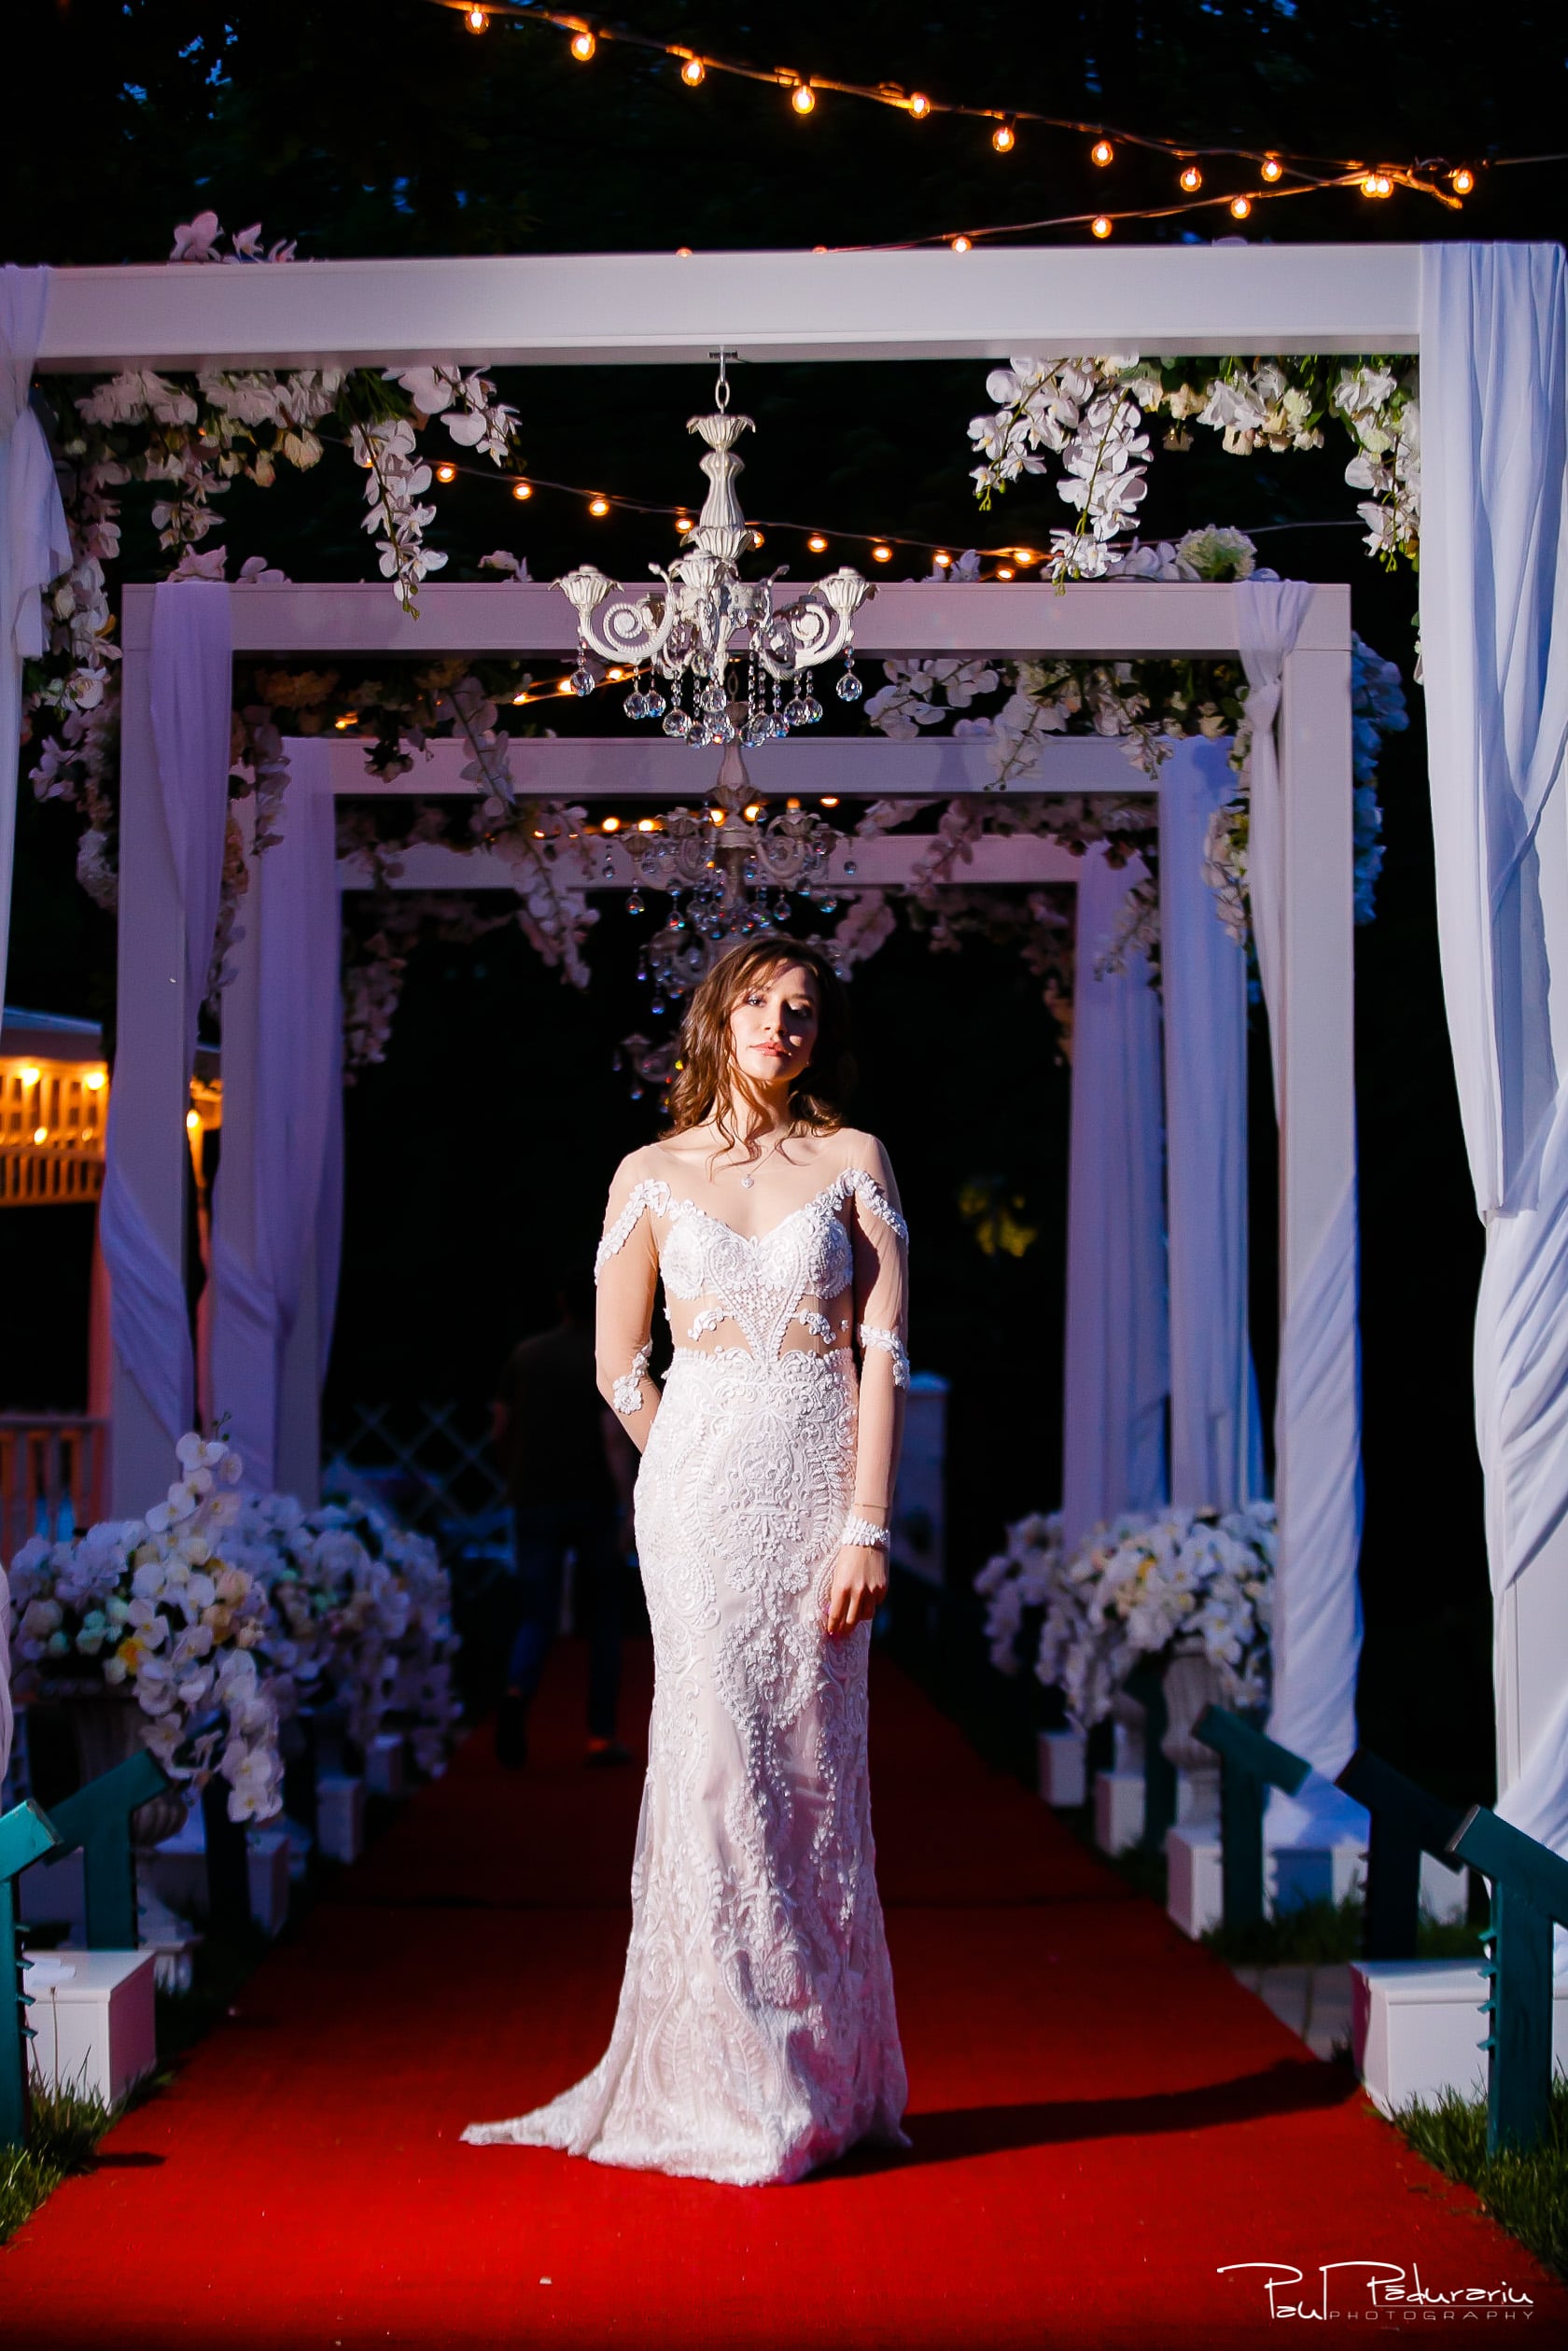 Modern Bride Edith Val colectie rochie mireasa 2019 - fotograf profesionist iasi paul padurariu | nunta iasi 15